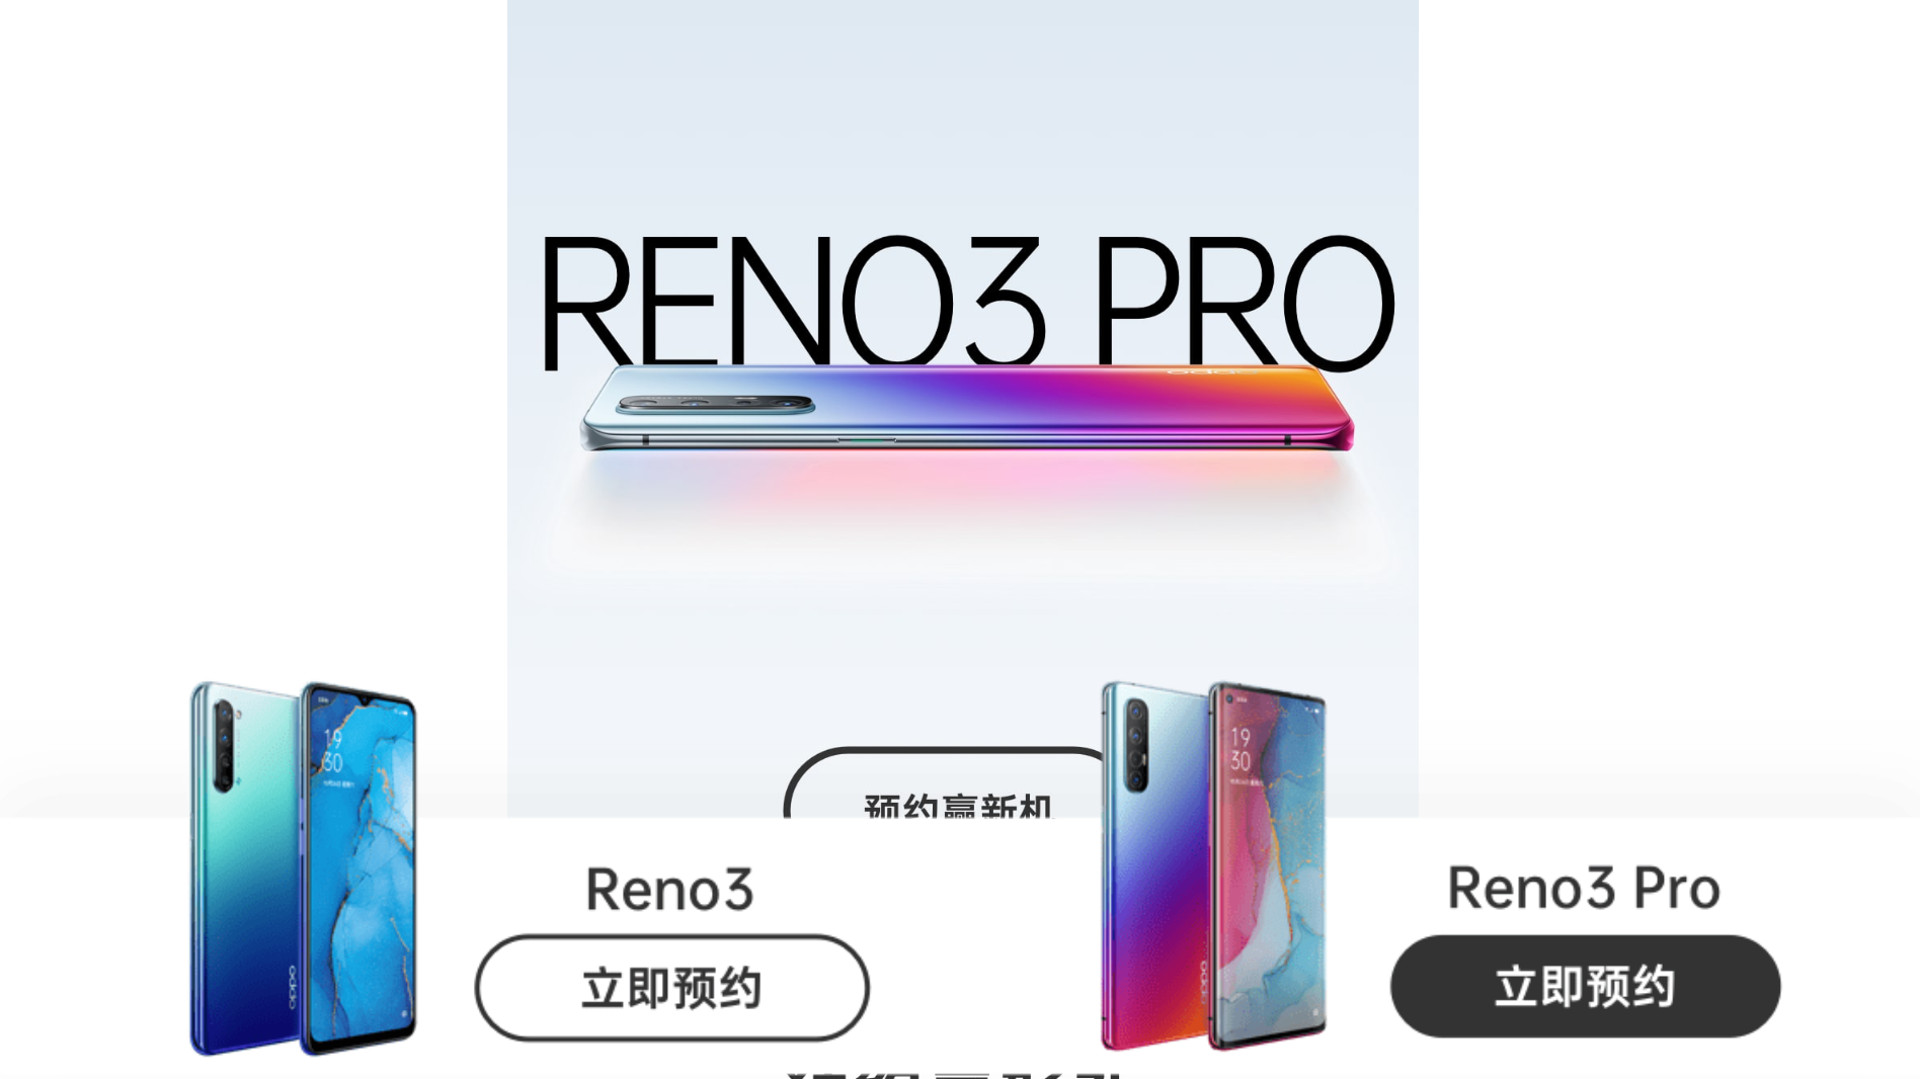 The Oppo Reno 3 Pro 5G and Reno 3.